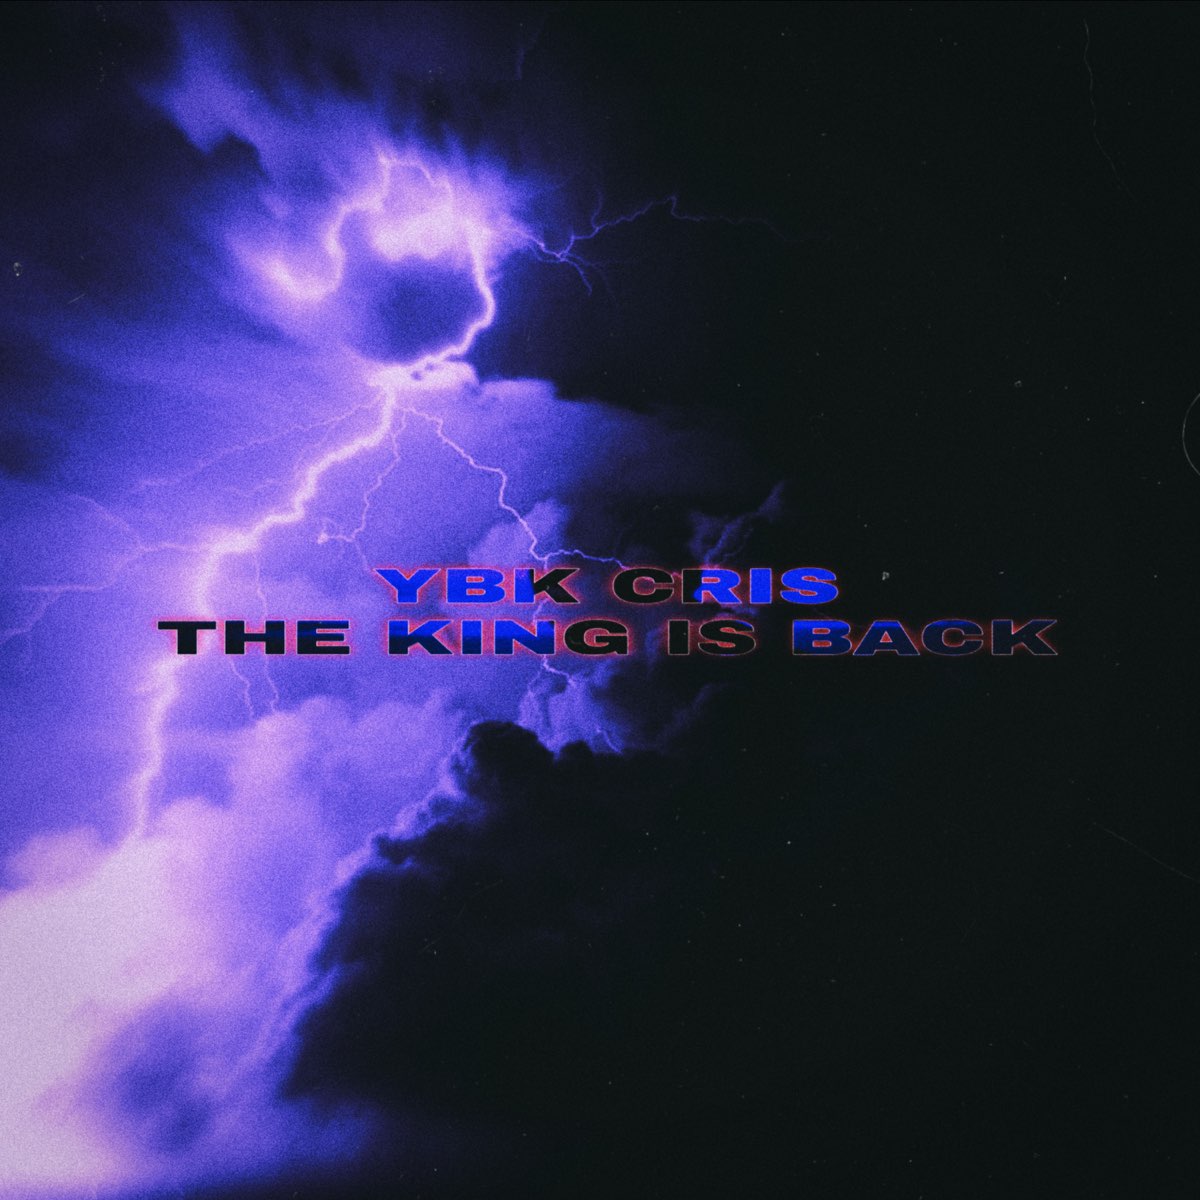 The King Is Back - Single của YBK CRIS trên Apple Music